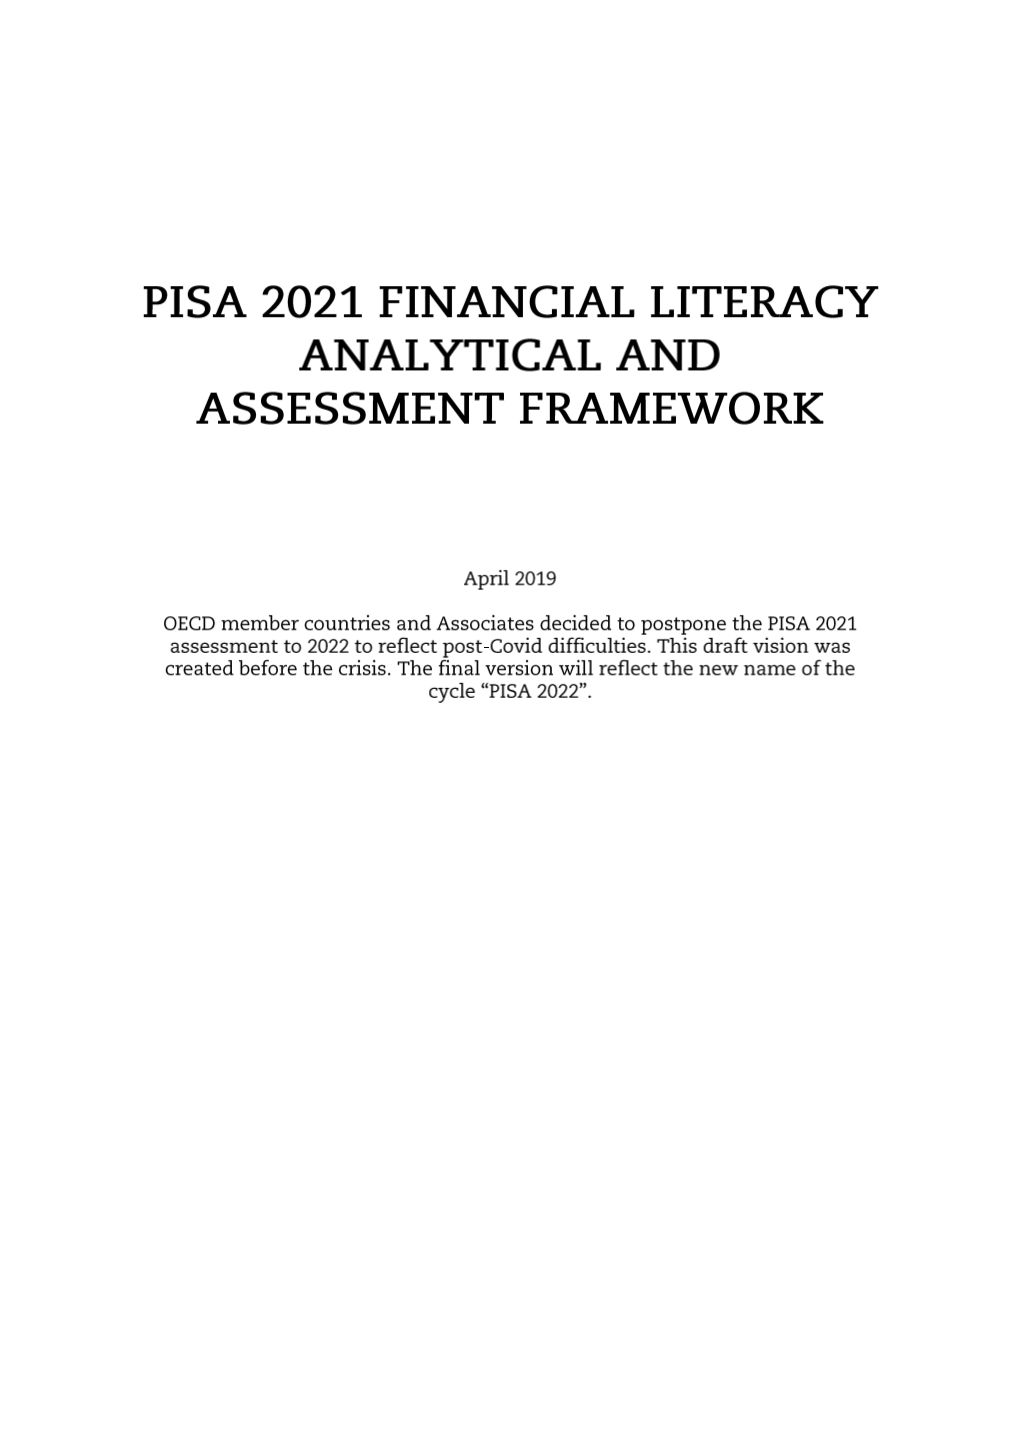 PISA 2022 Financial Literacy